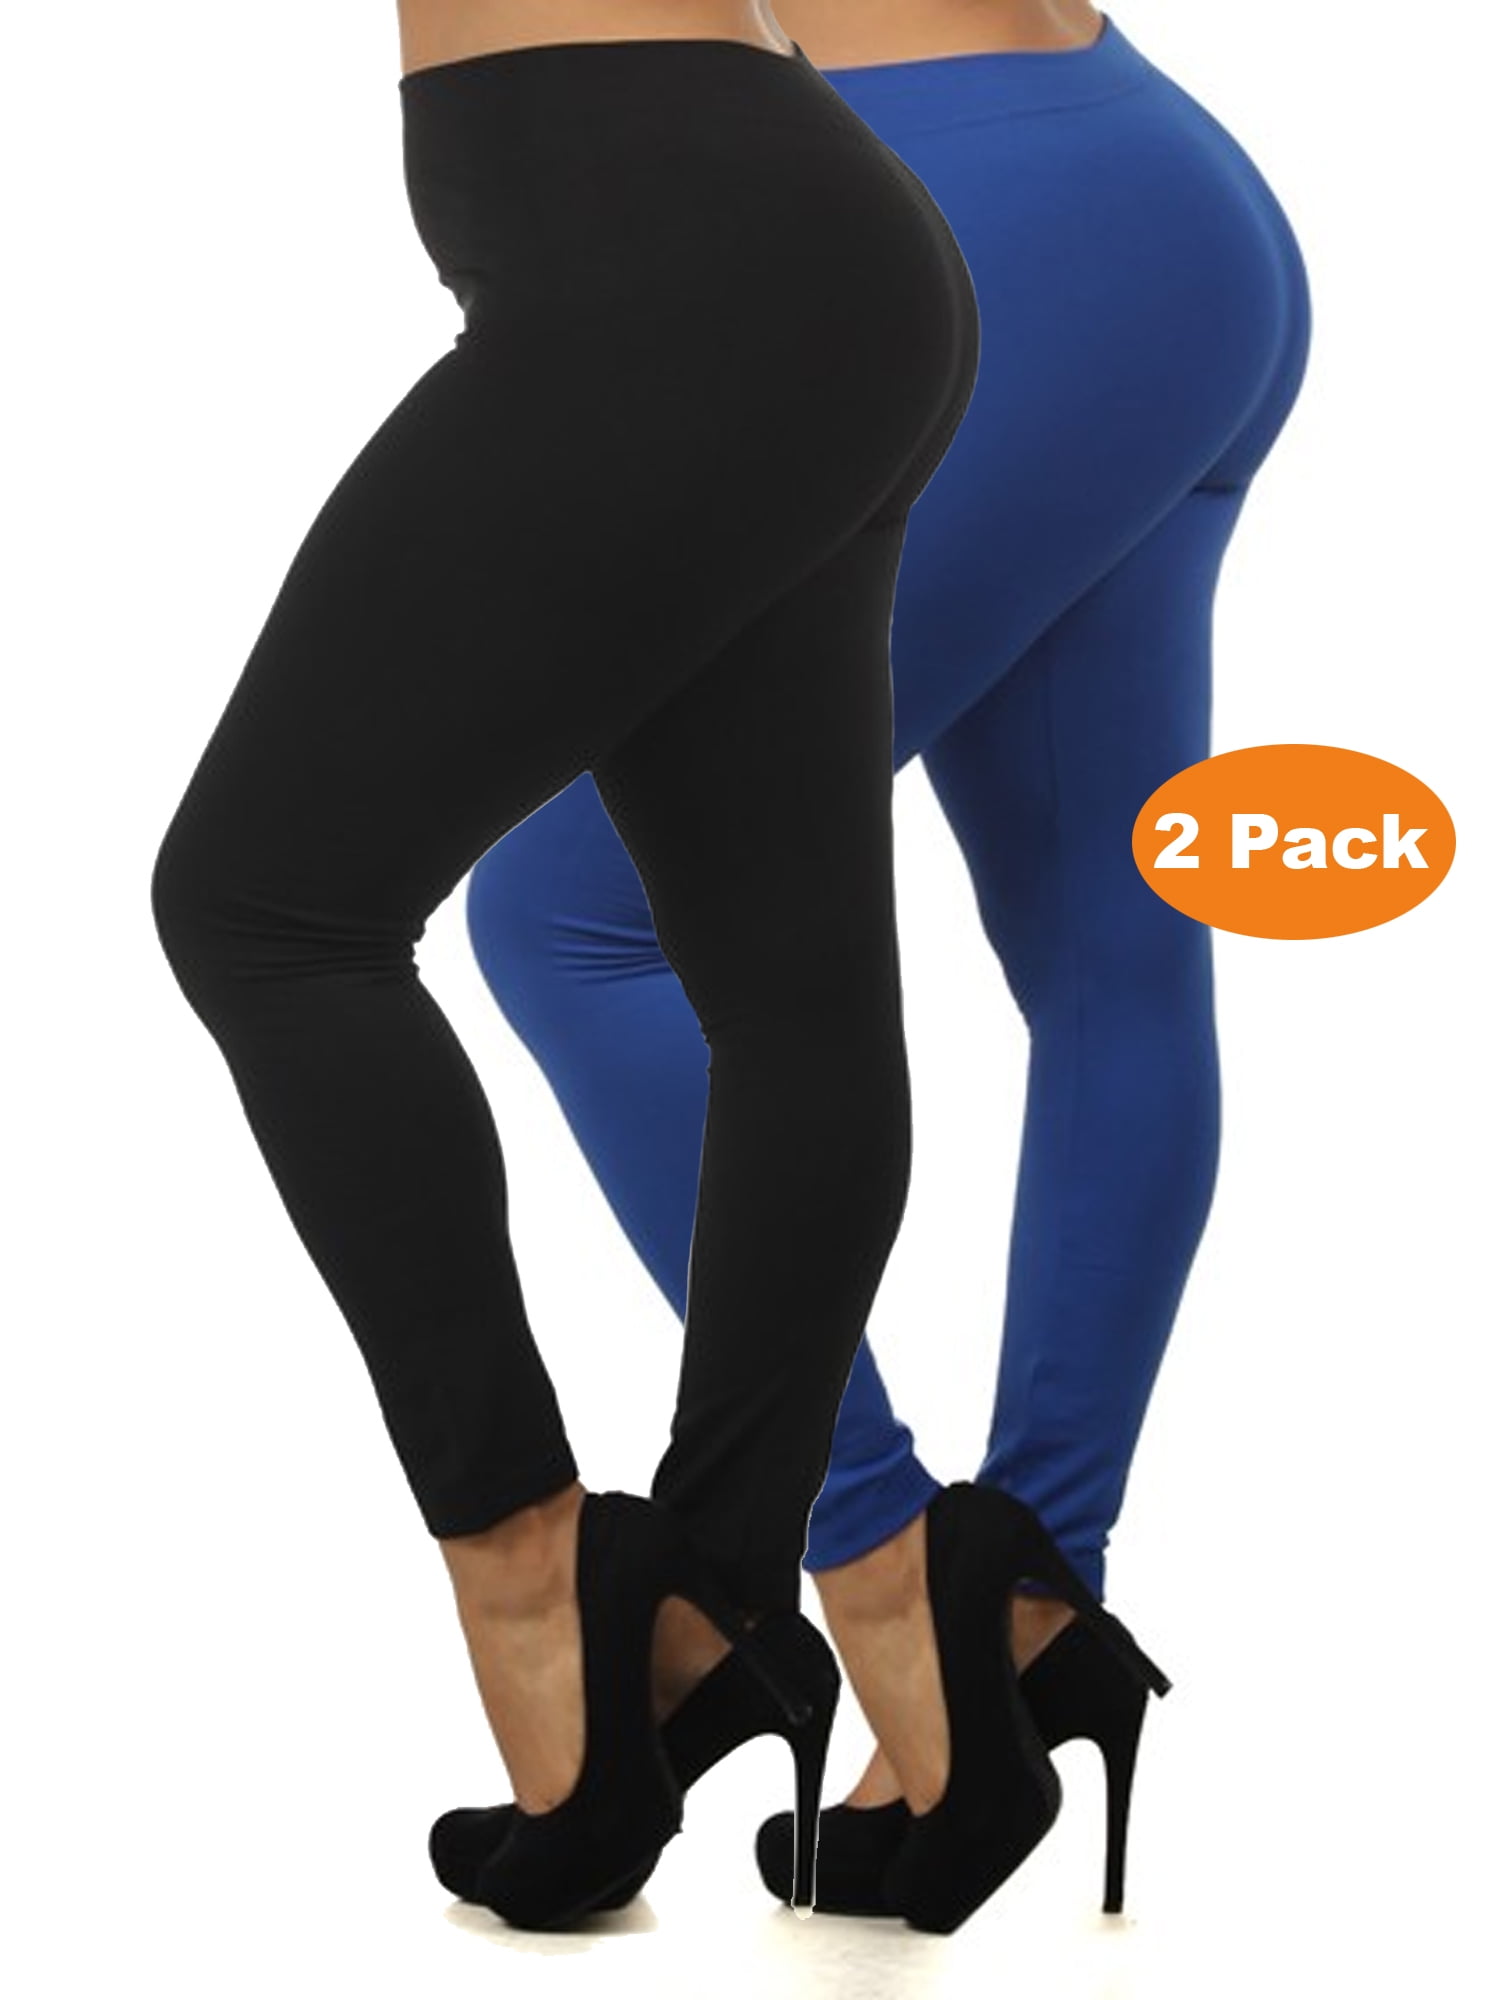 LAVRA Women's Plus Size Velvet Leggings High Wasited Warm Stretch  Pants-2XL-Black 